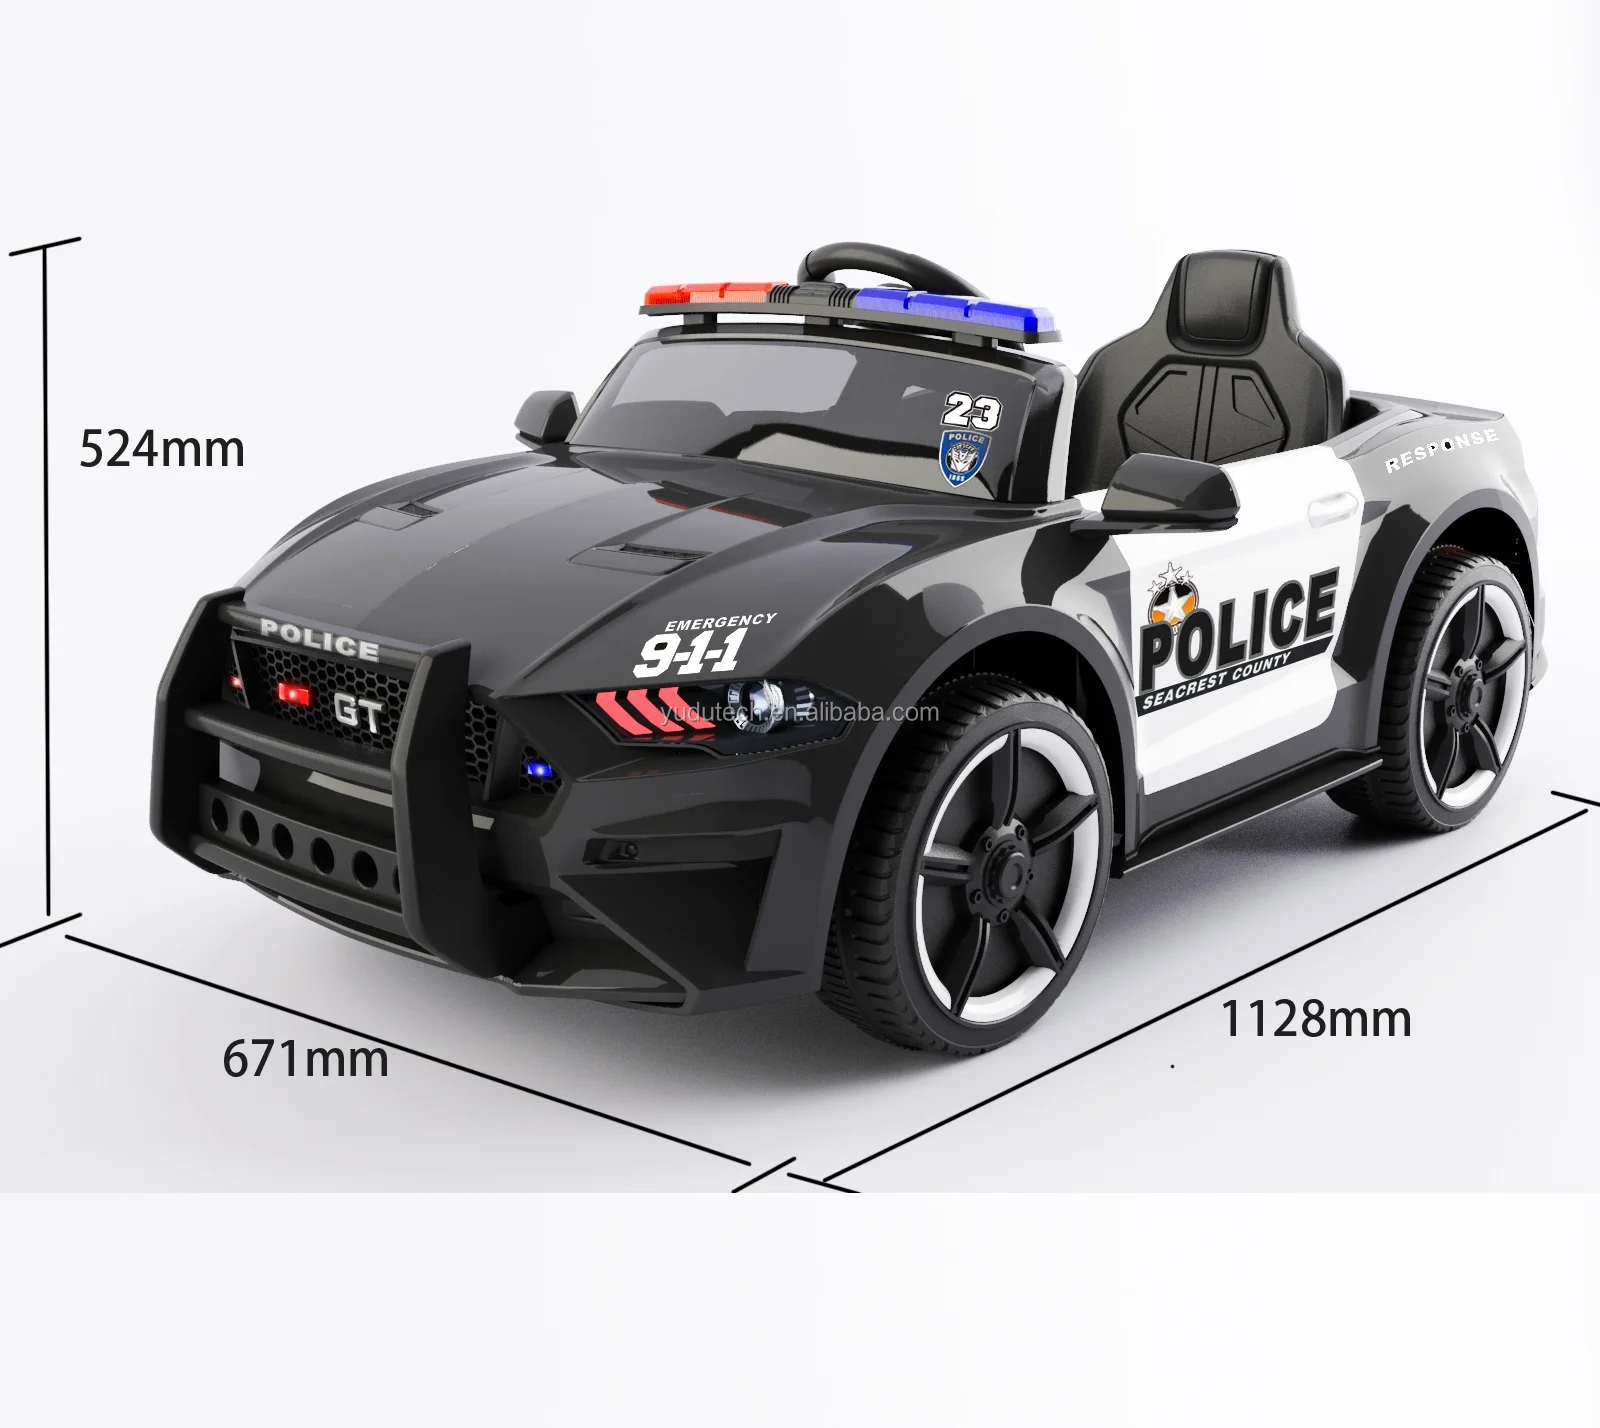 Включи электронная машина. Электромобиль Tommy Mustang Police-5. TJAGO BMW Police аккумулятор. Ford Police электромобиль детский. Kids cars автомобиль Police kt6598.